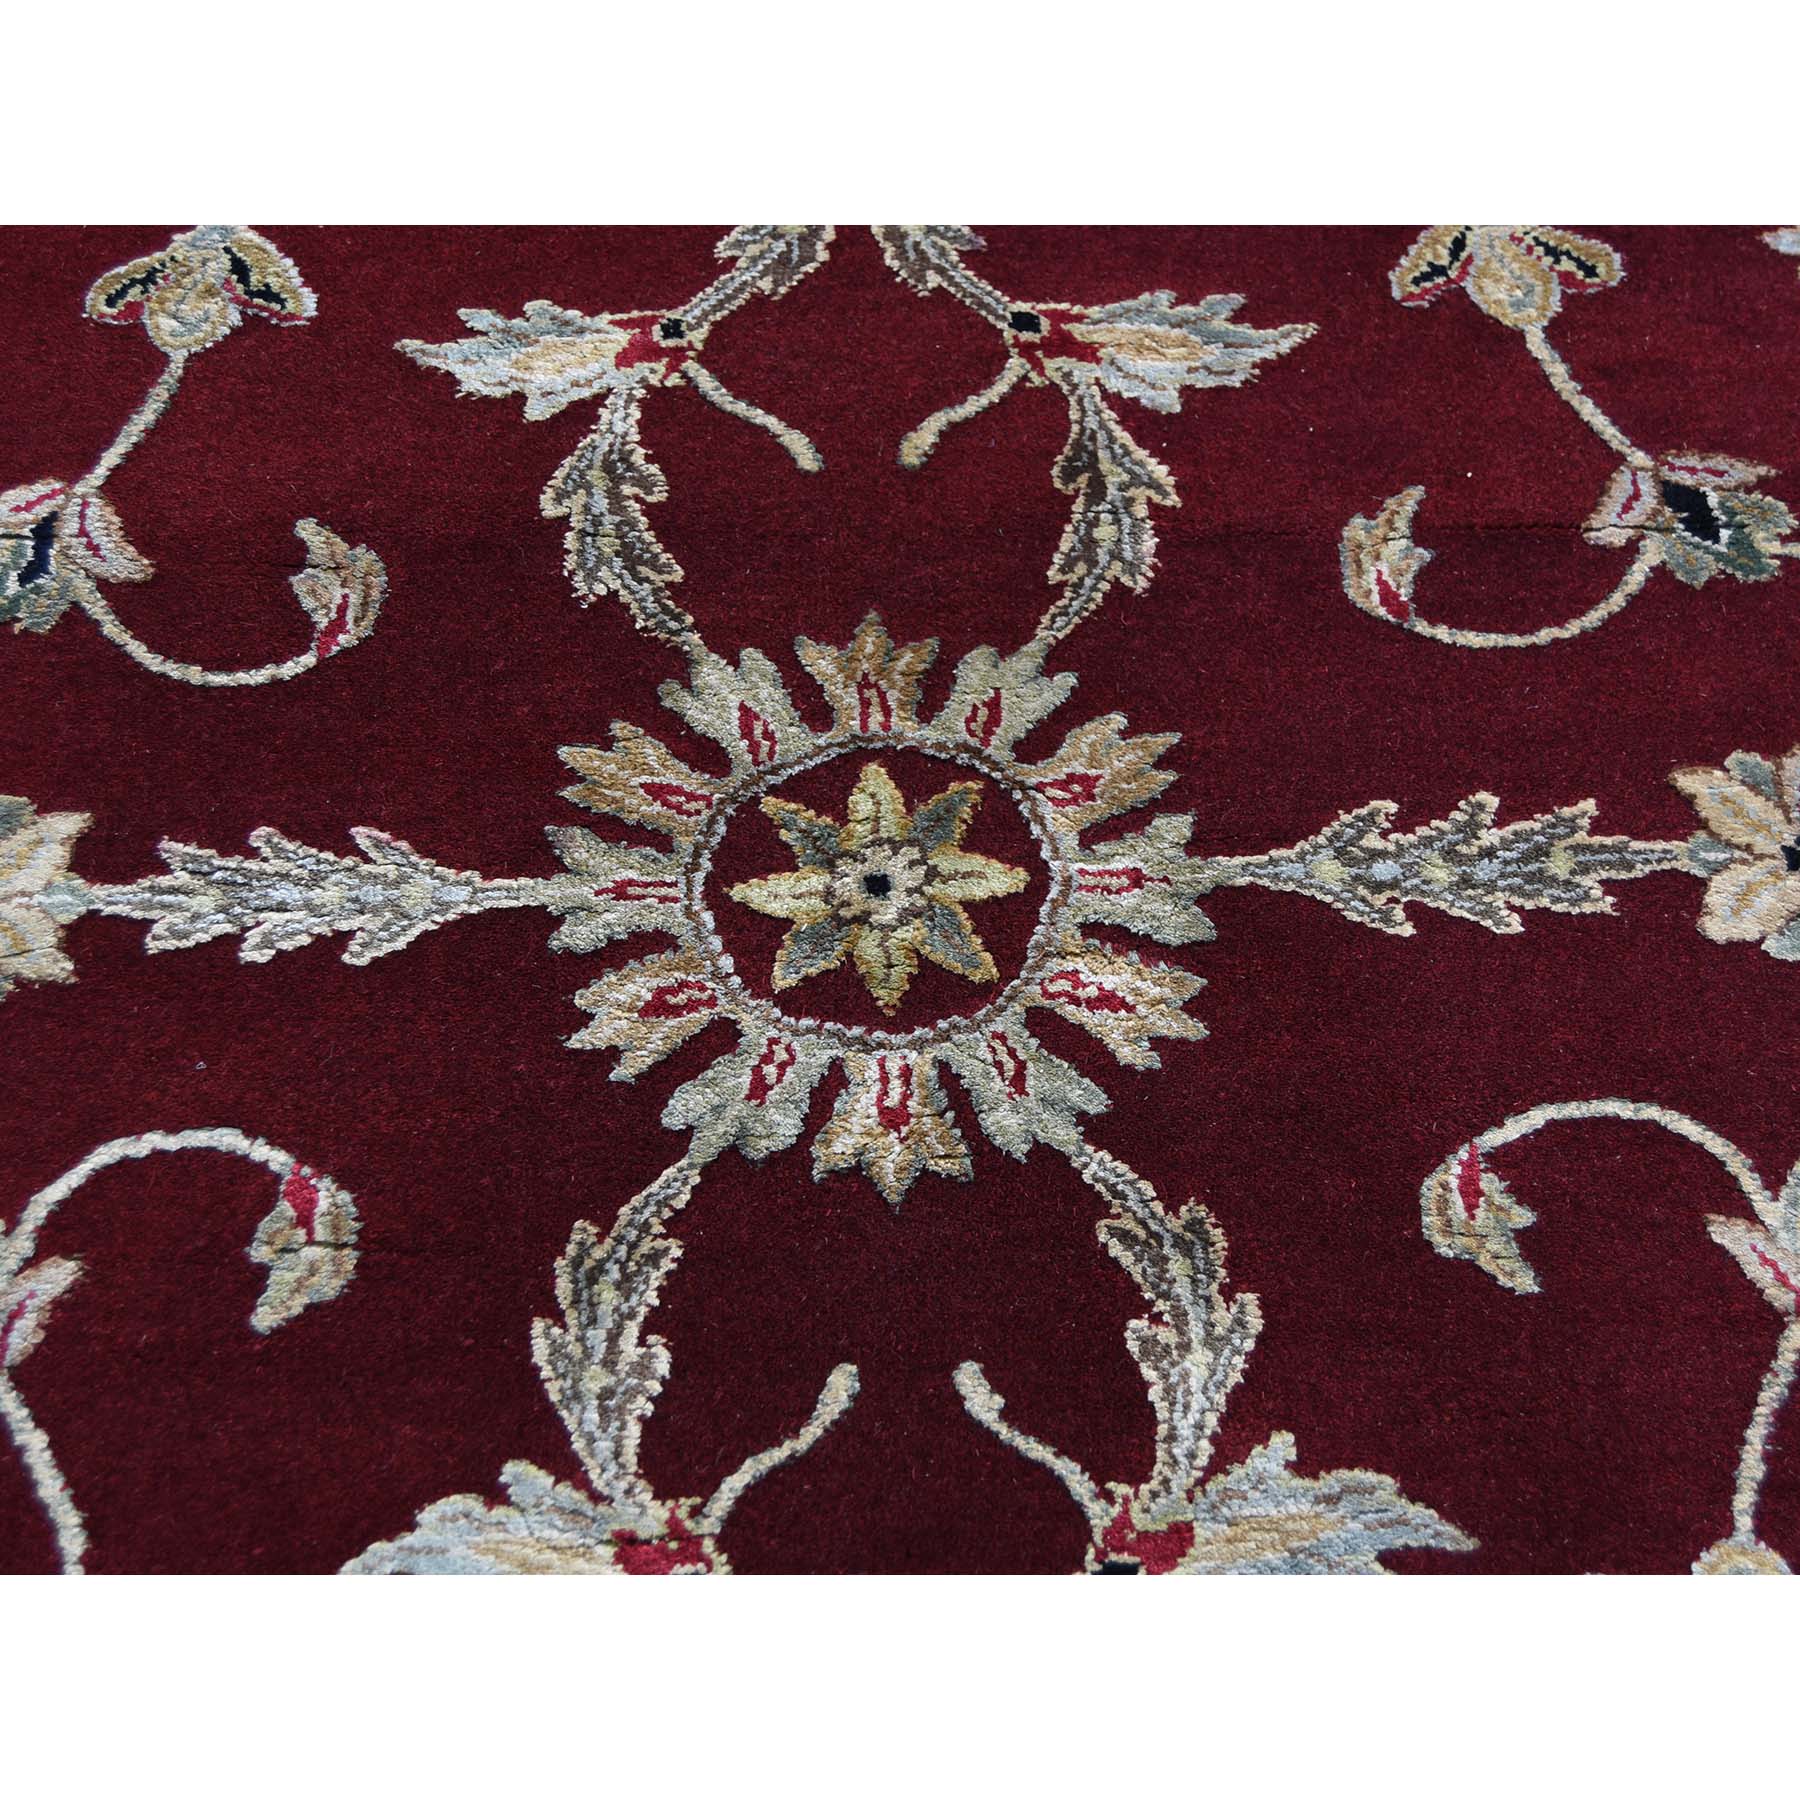 10-1 x10-1  Half Wool and Half Silk Burgundy Rajasthan Round Hand-Knotted Oriental Rug 